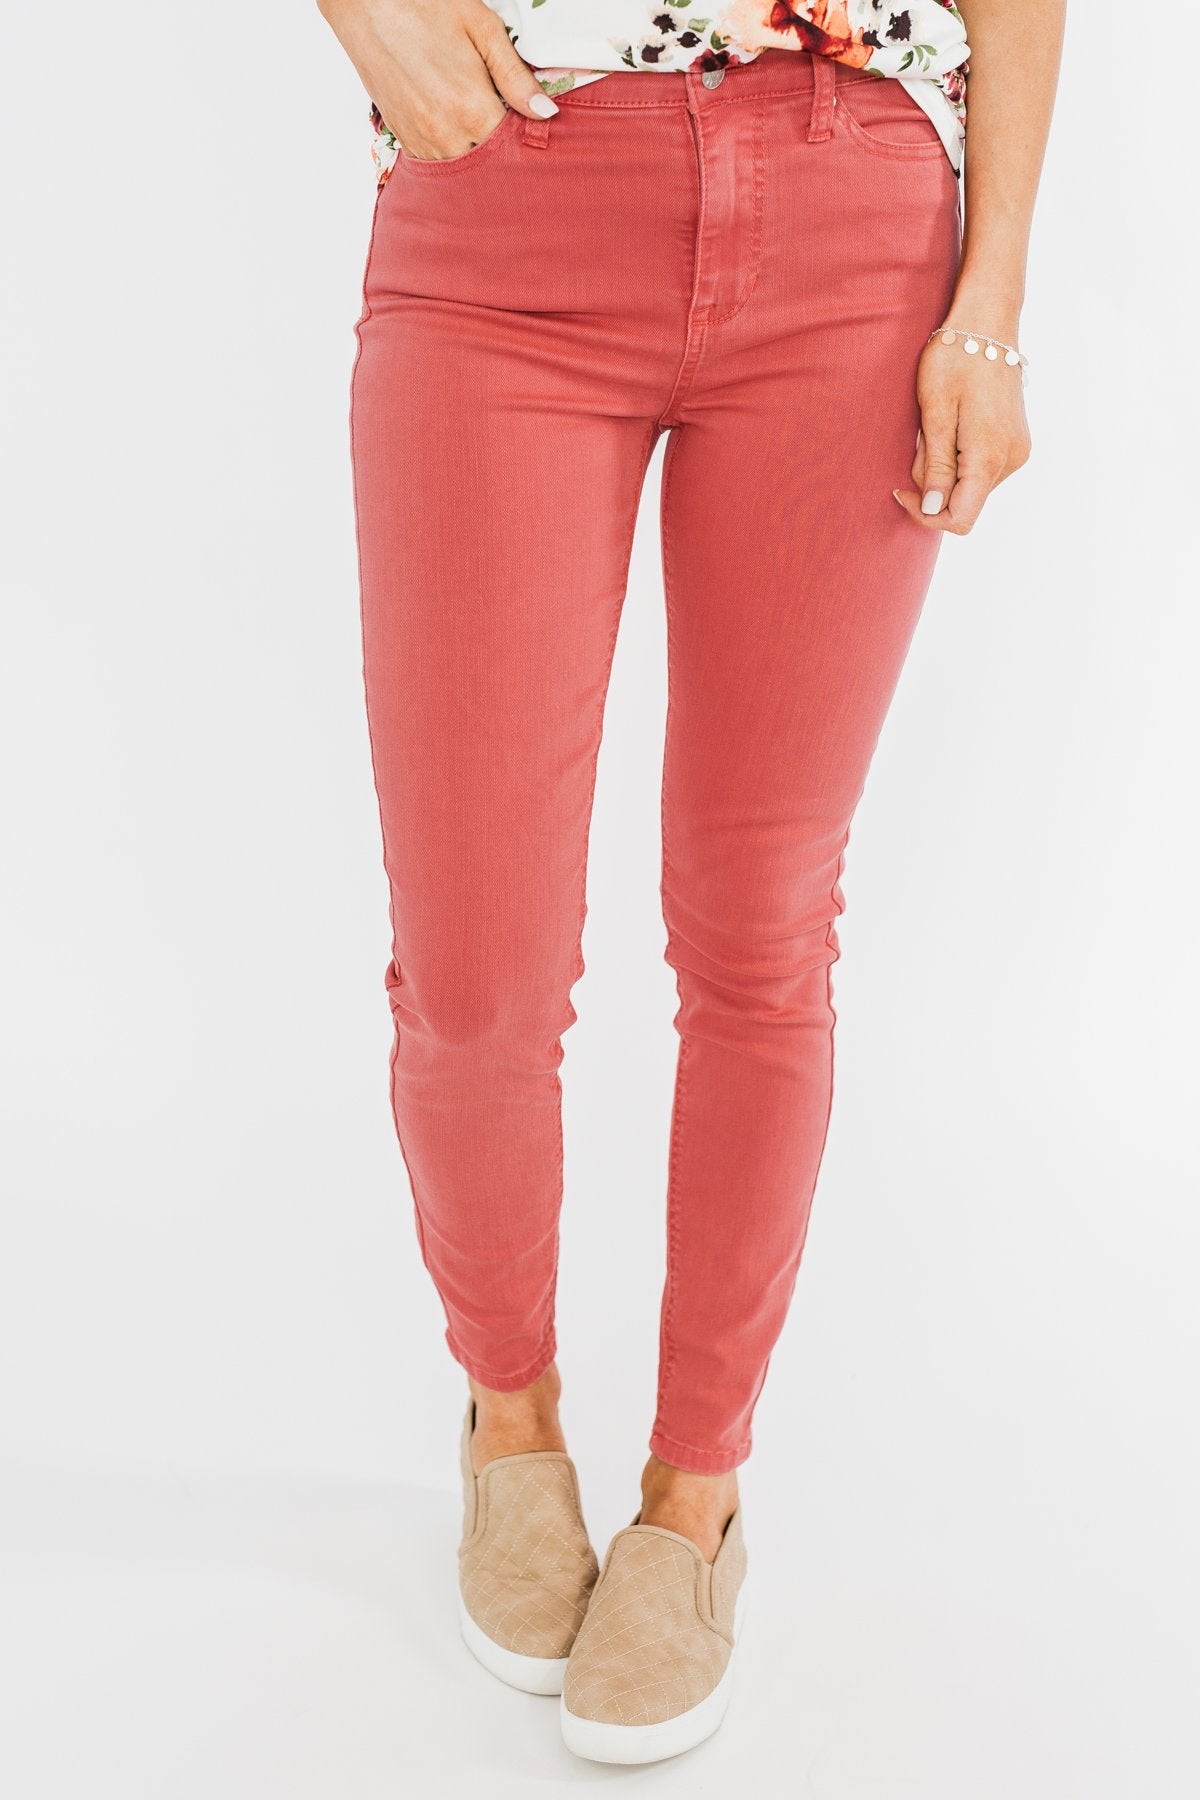 Celebrity Pink Skinny Jeans- Coral